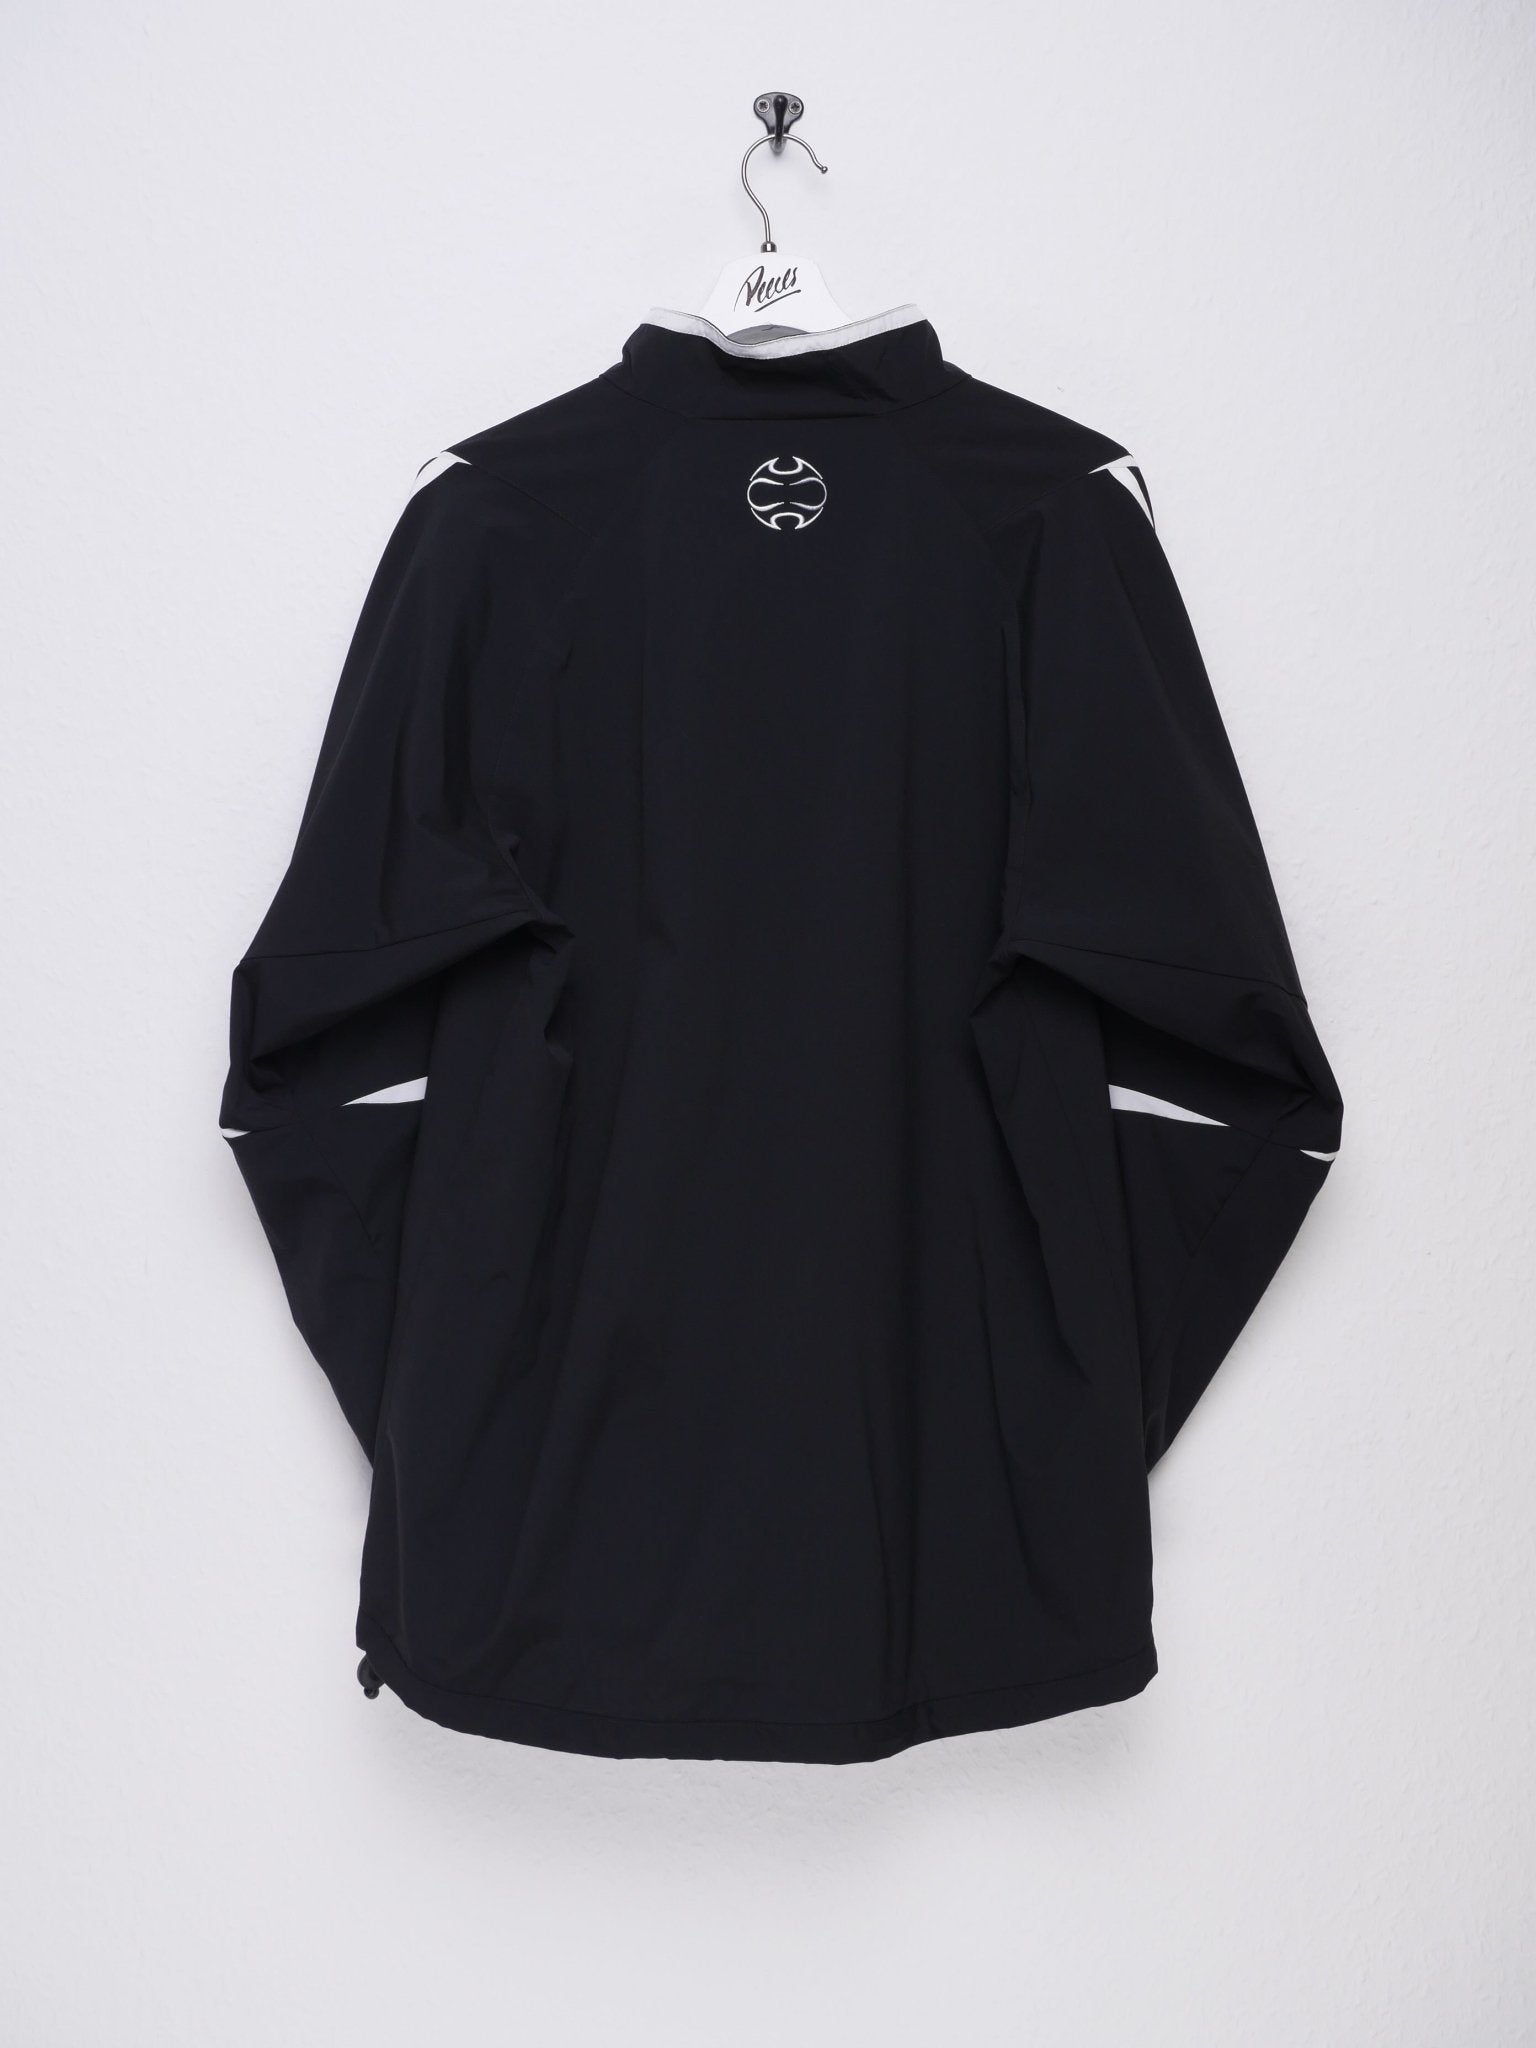 Adidas Madonna Soccer embroidered Logo Track Jacket - Peeces